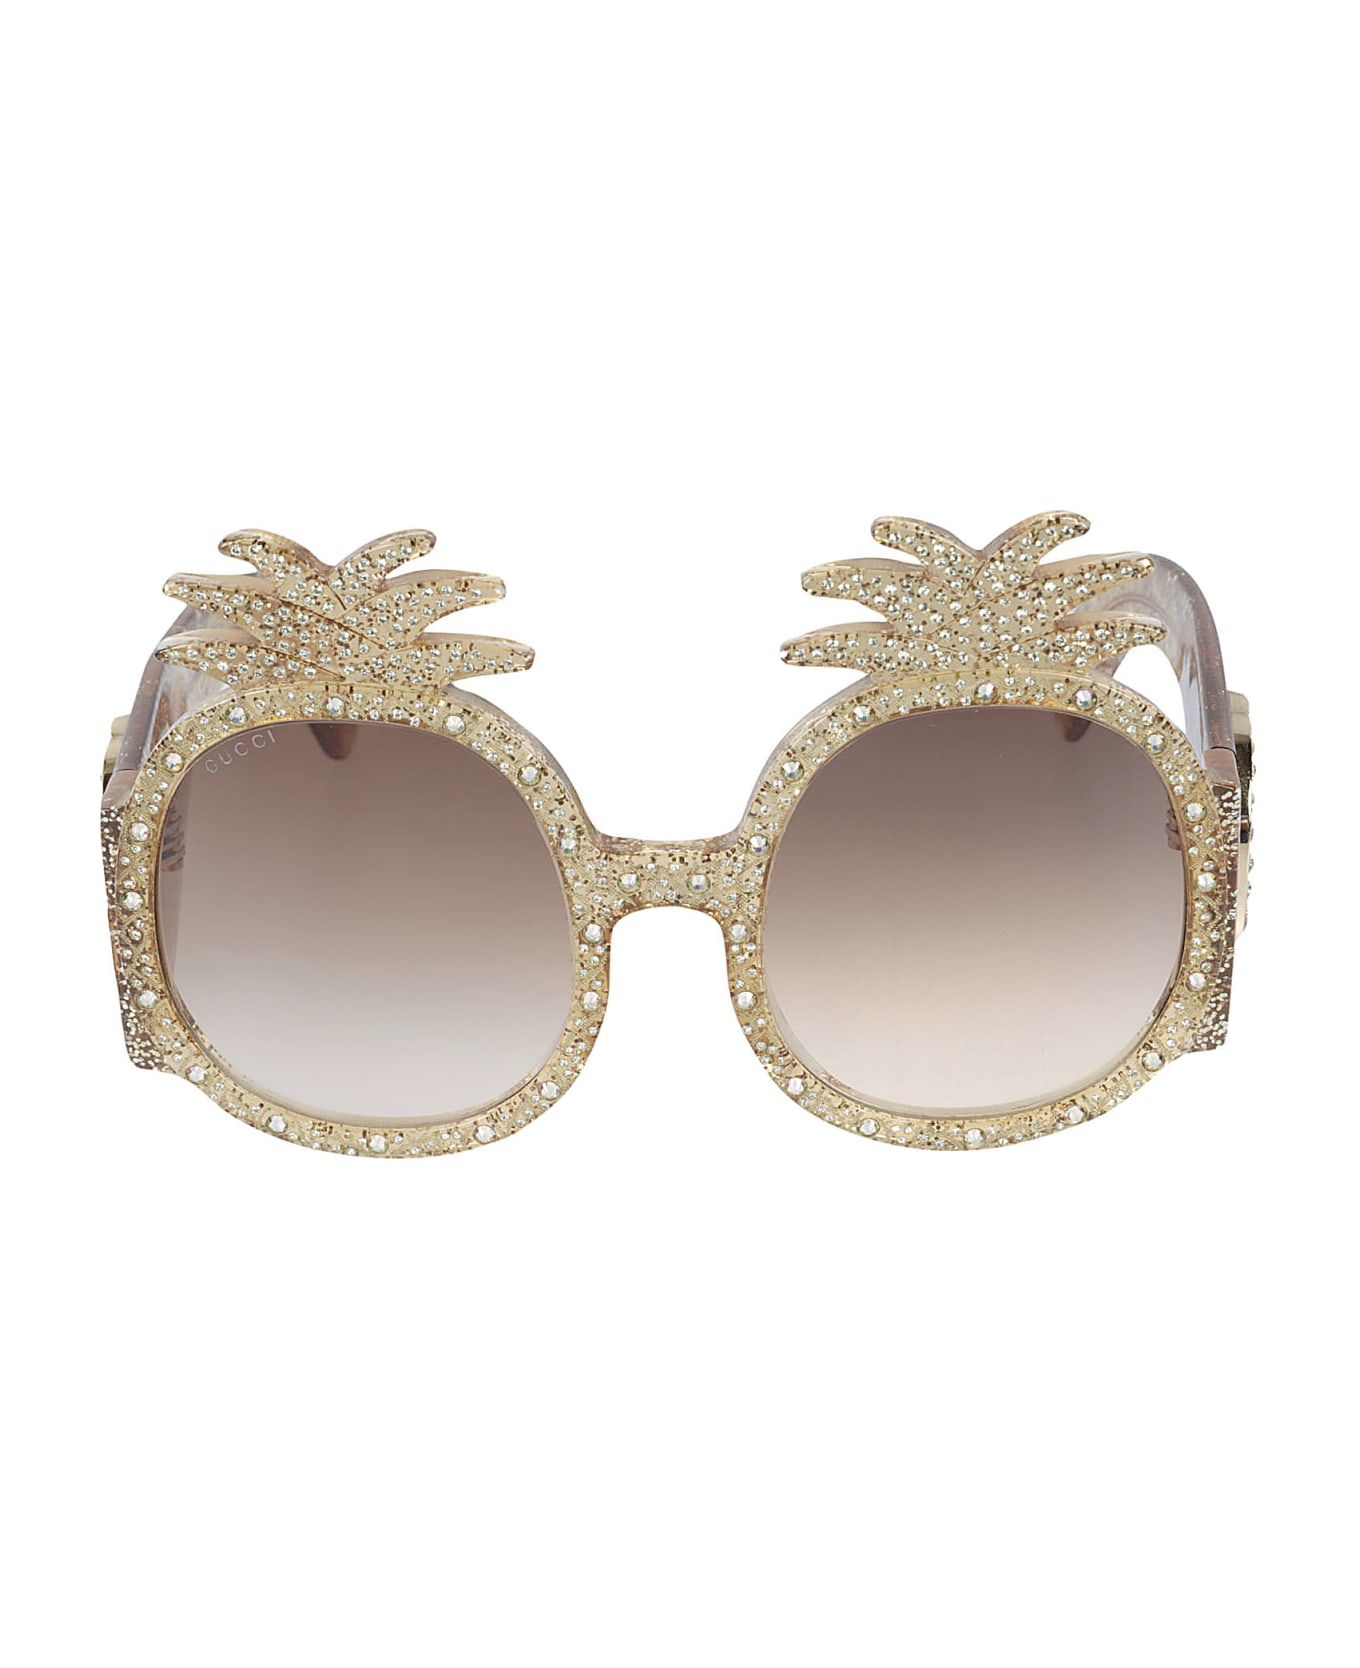 Gucci Eyewear Embellished Frame Sunglasses - 001 gold gold brown